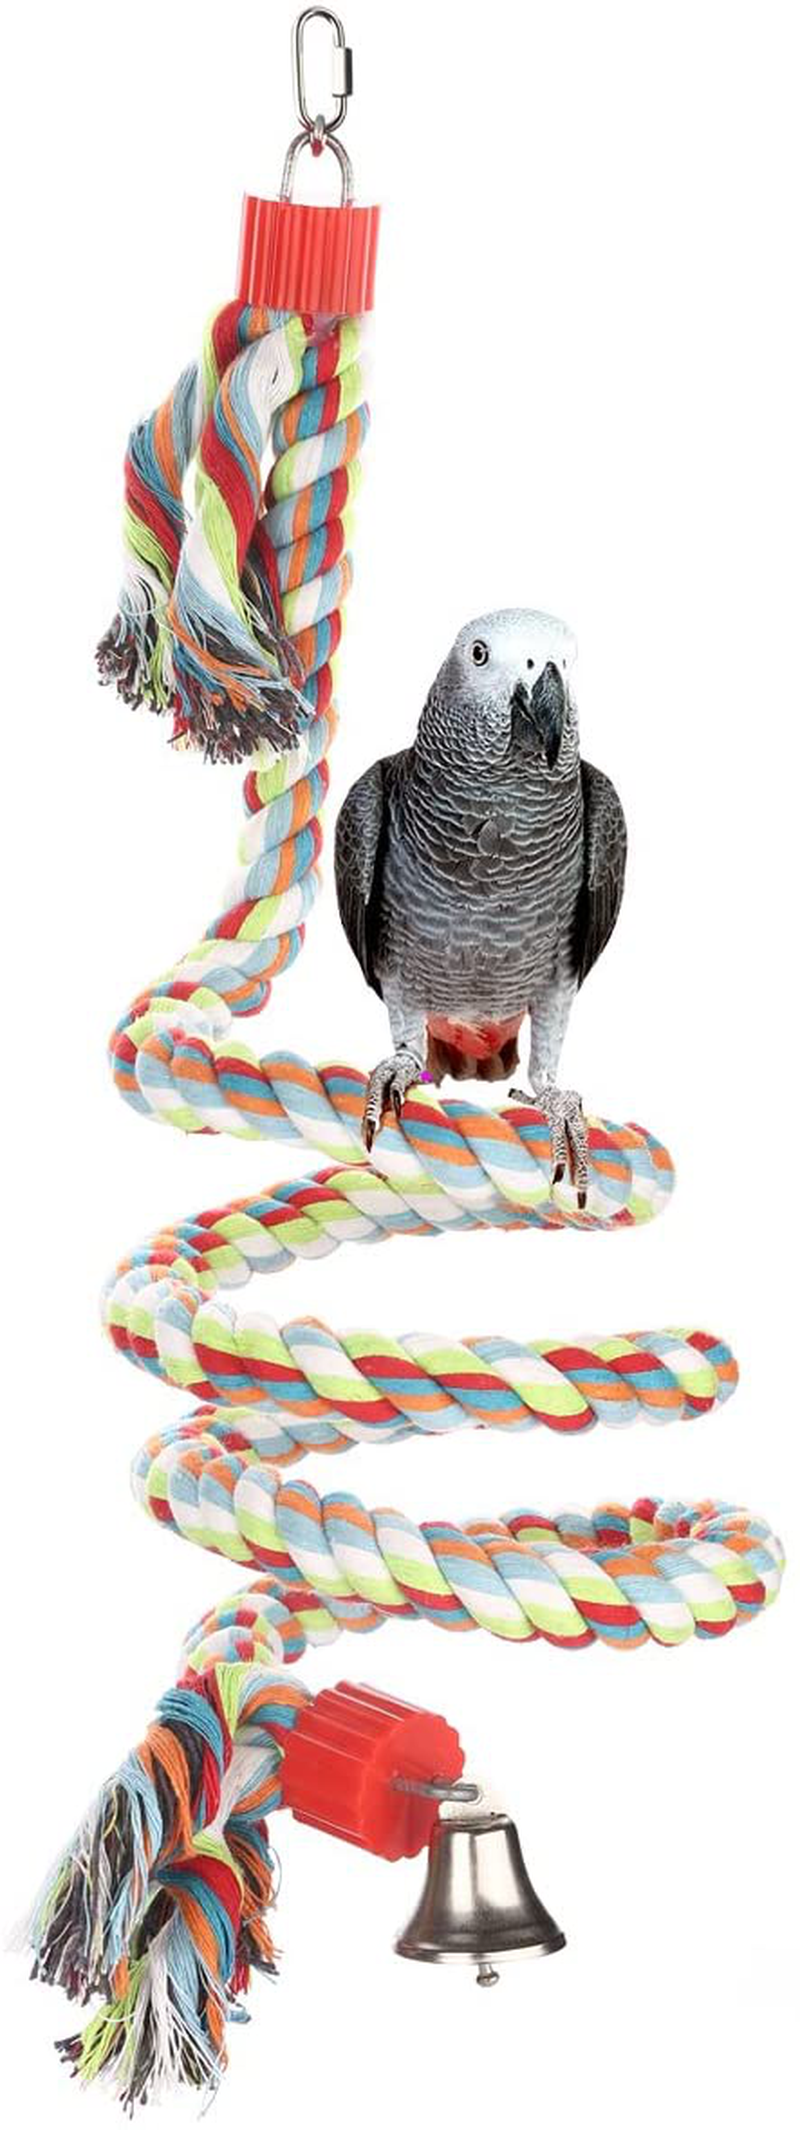 Jusney Bird Perch, Large Parrot Toys Climbing Rope Bungee Bird Toys